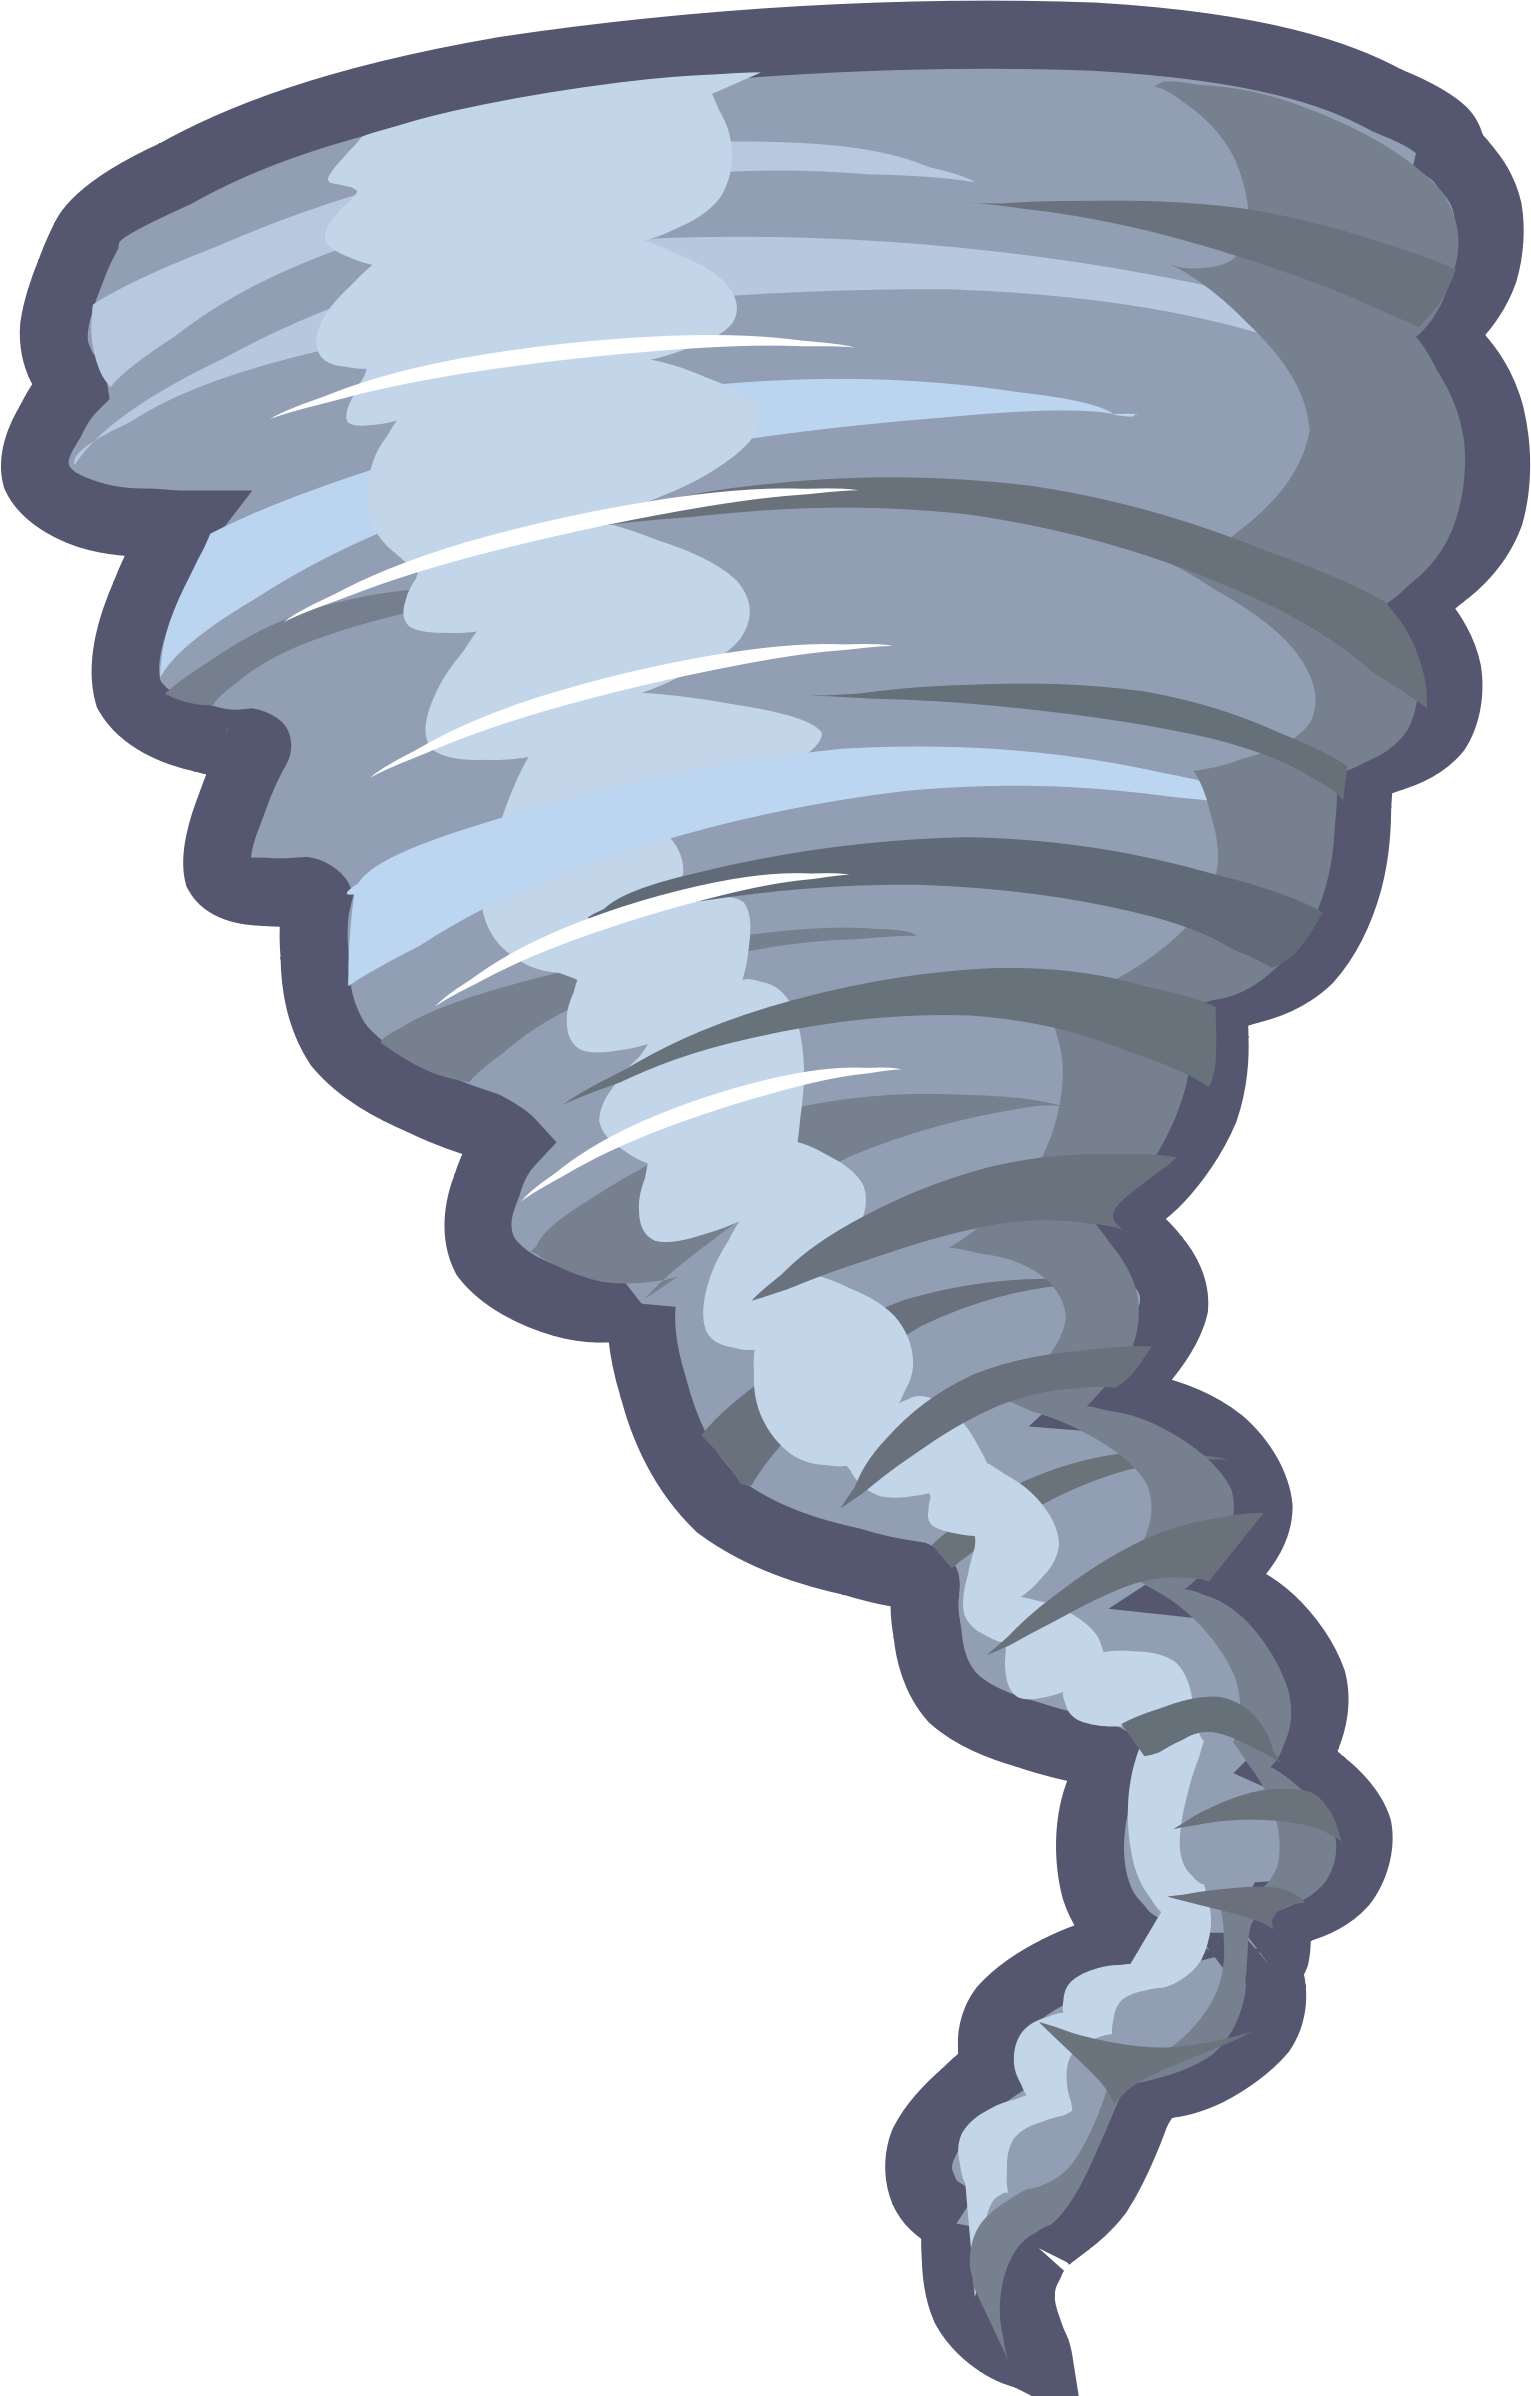 Free Tornado Gif Transparent, Download Free Tornado Gif Transparent png ...